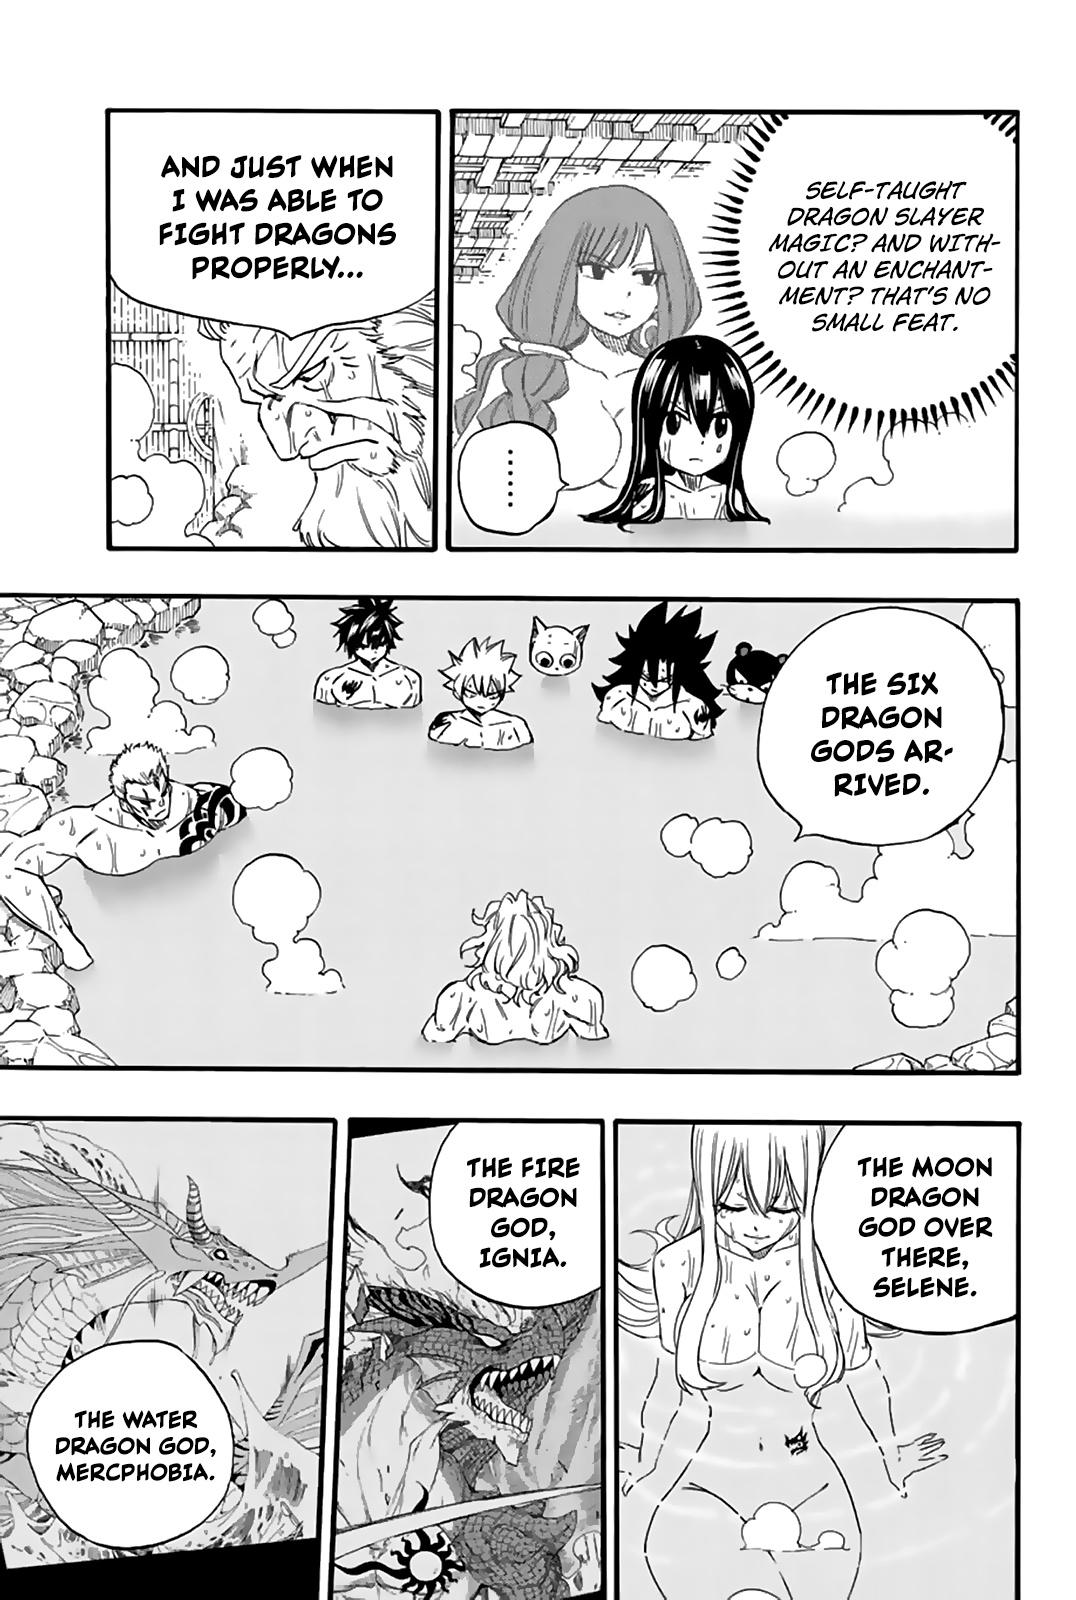 Le manga Fairy Tail: 100 Years Quest adapté en anime - Adala News